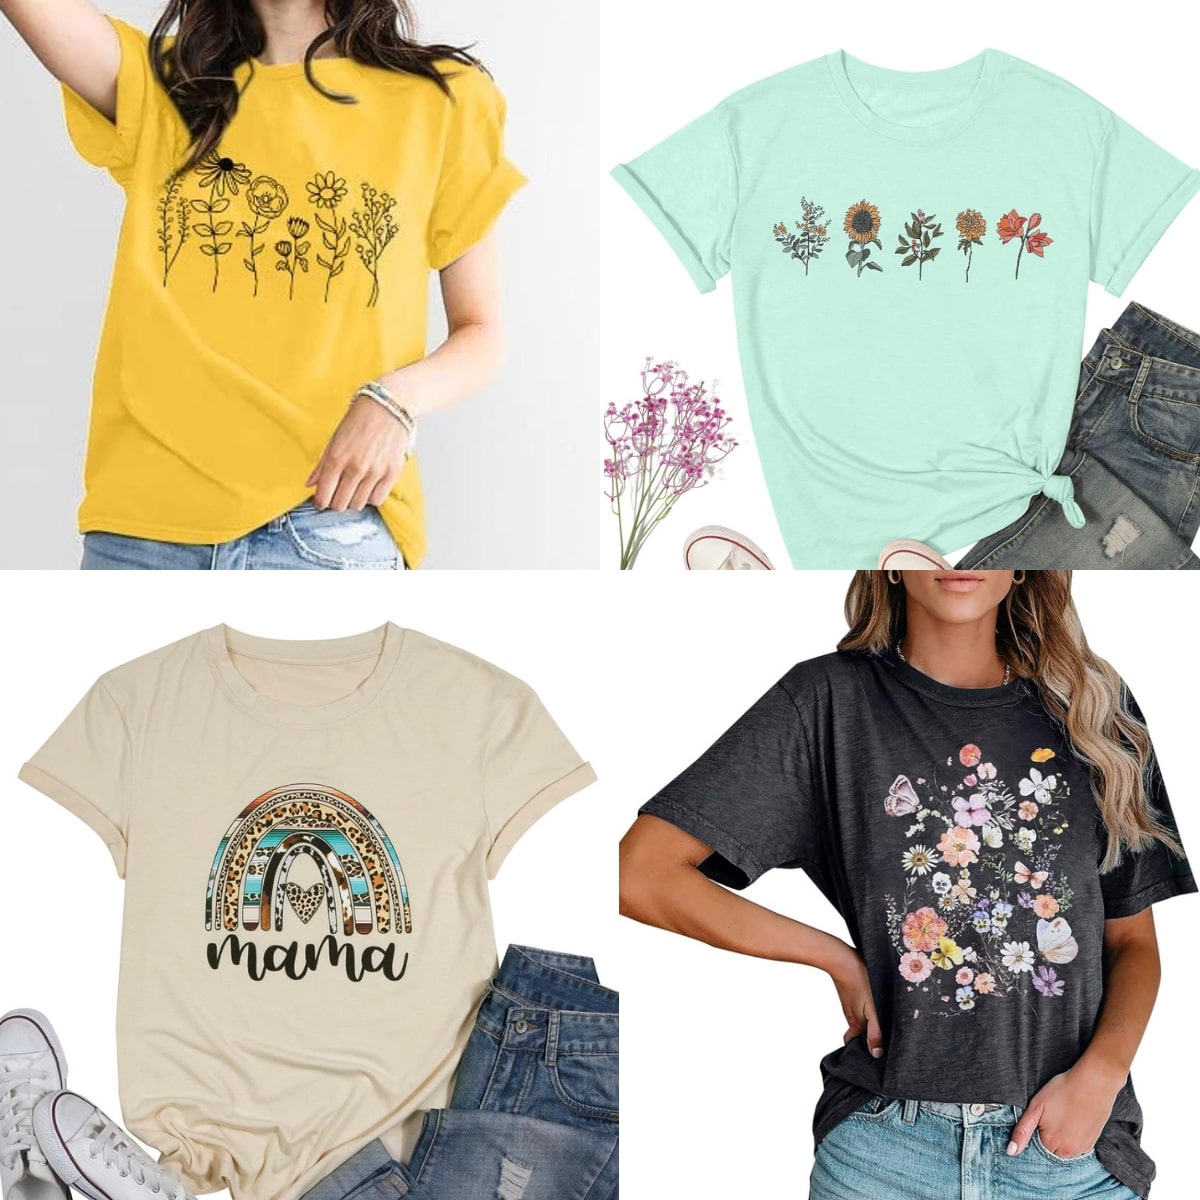 Wild Flower Shirt Flower Shirts for Women Floral Graphic 